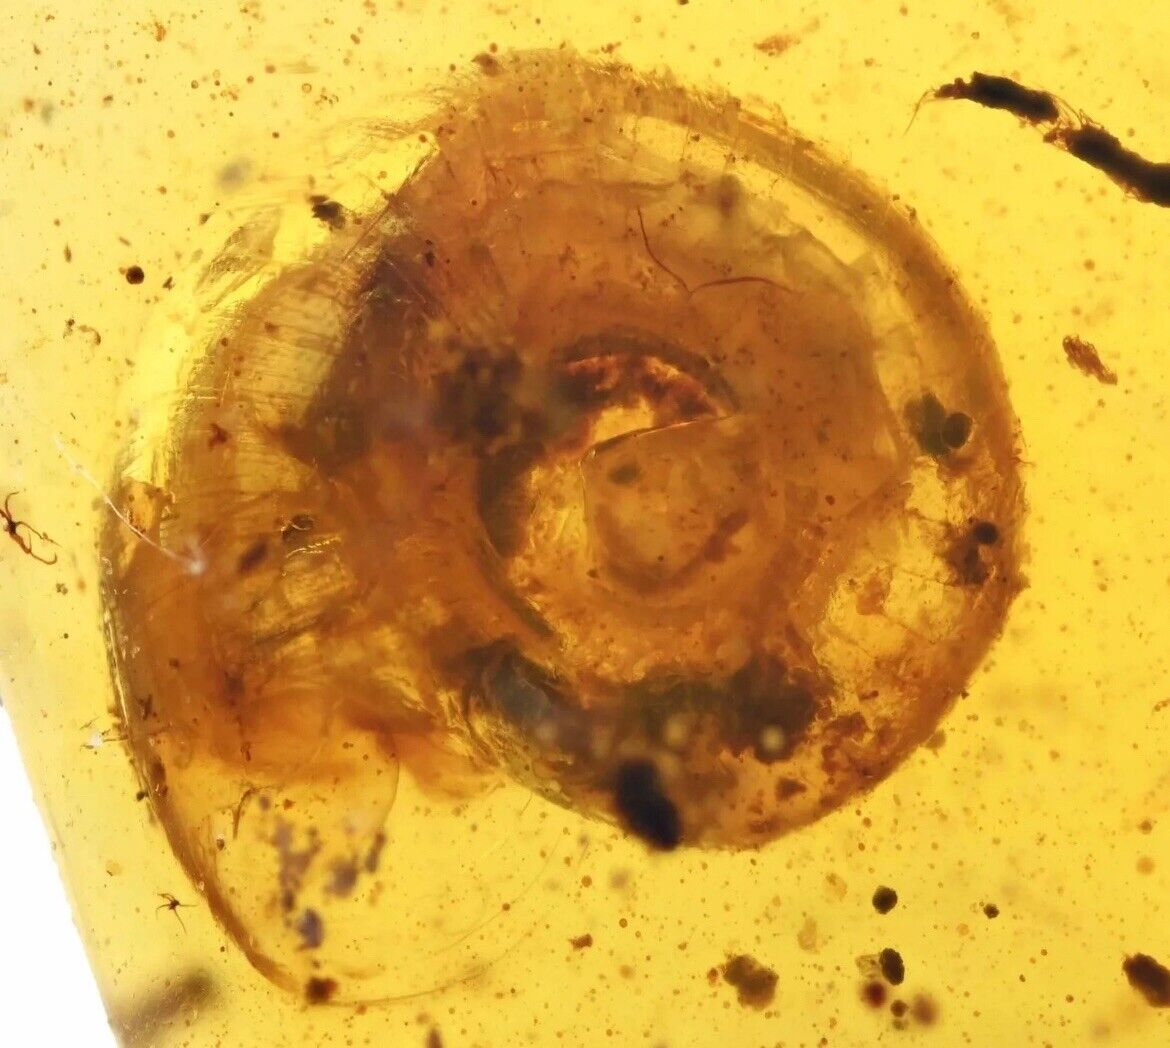 Super Rare Gastropoda (Land Snail), Fossil Inclusion in Burmese Amber